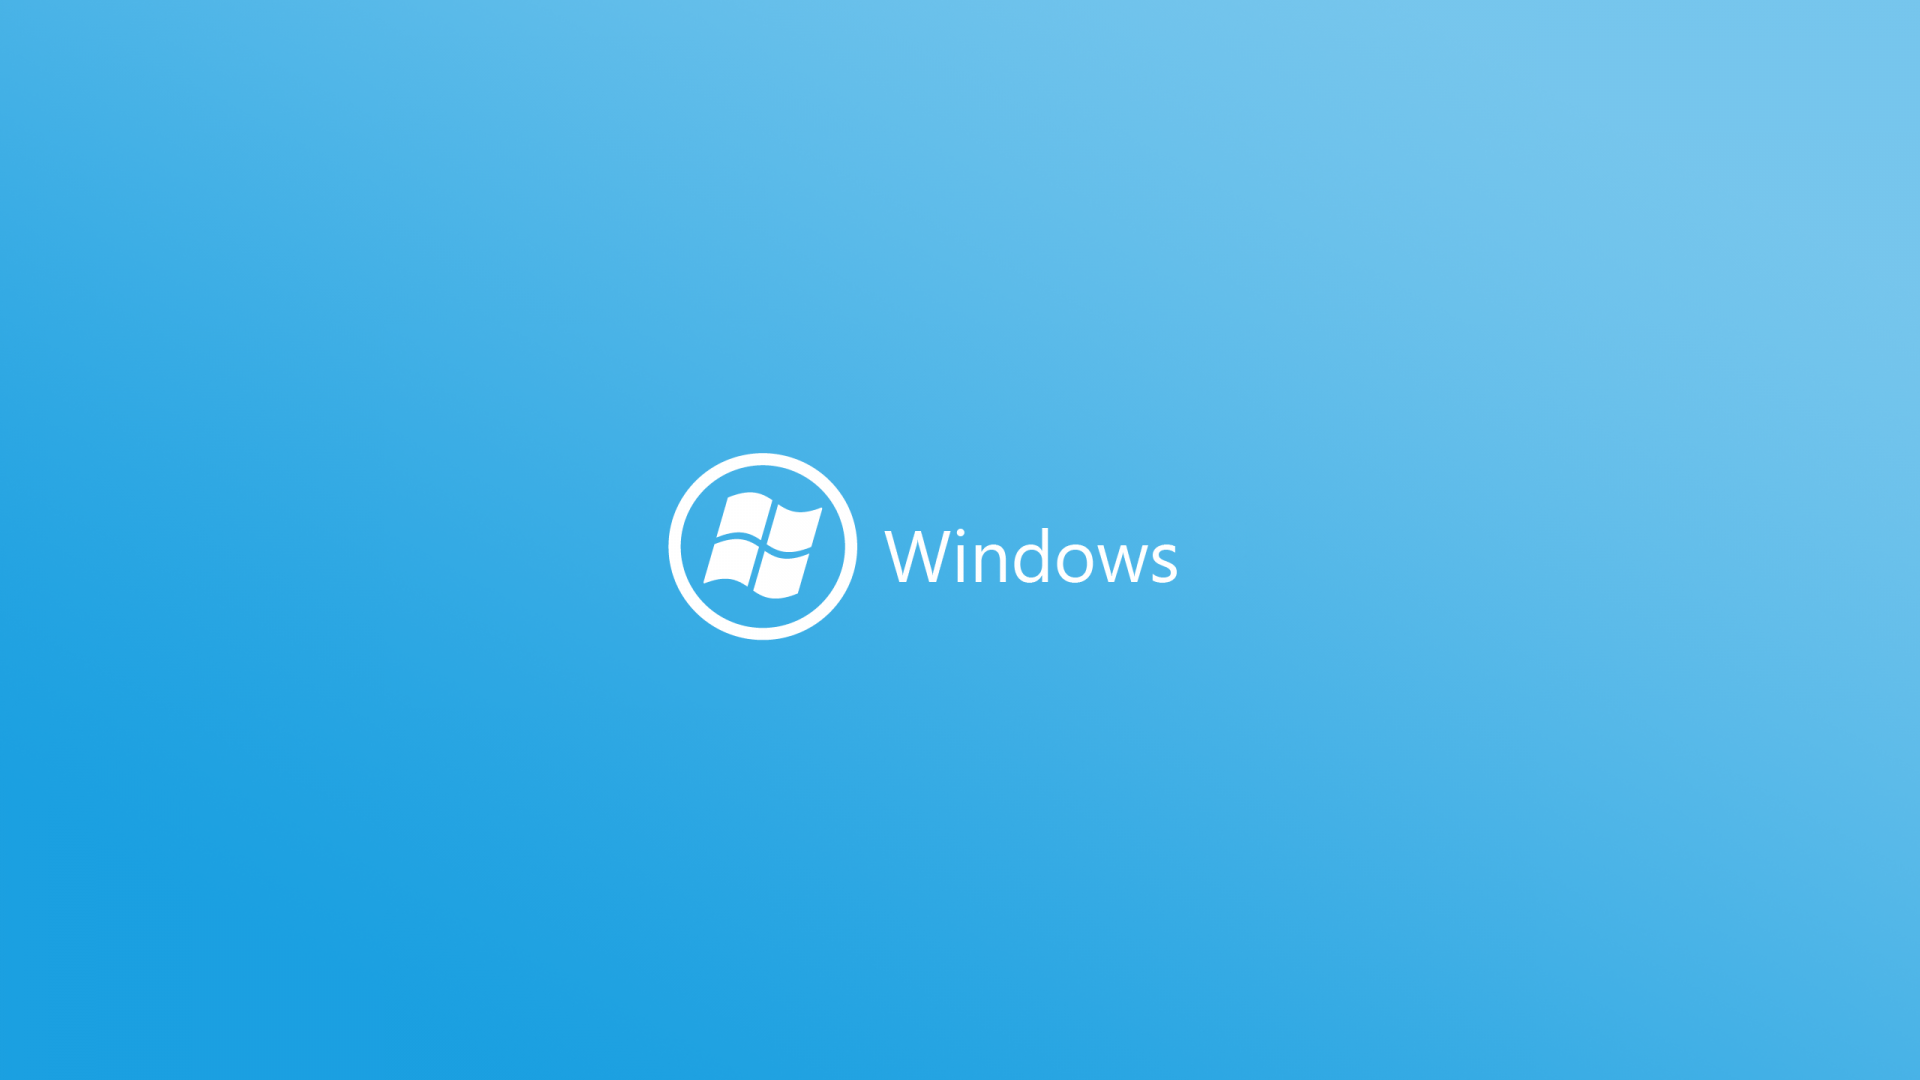 Wallpaper Windows logo in blue background